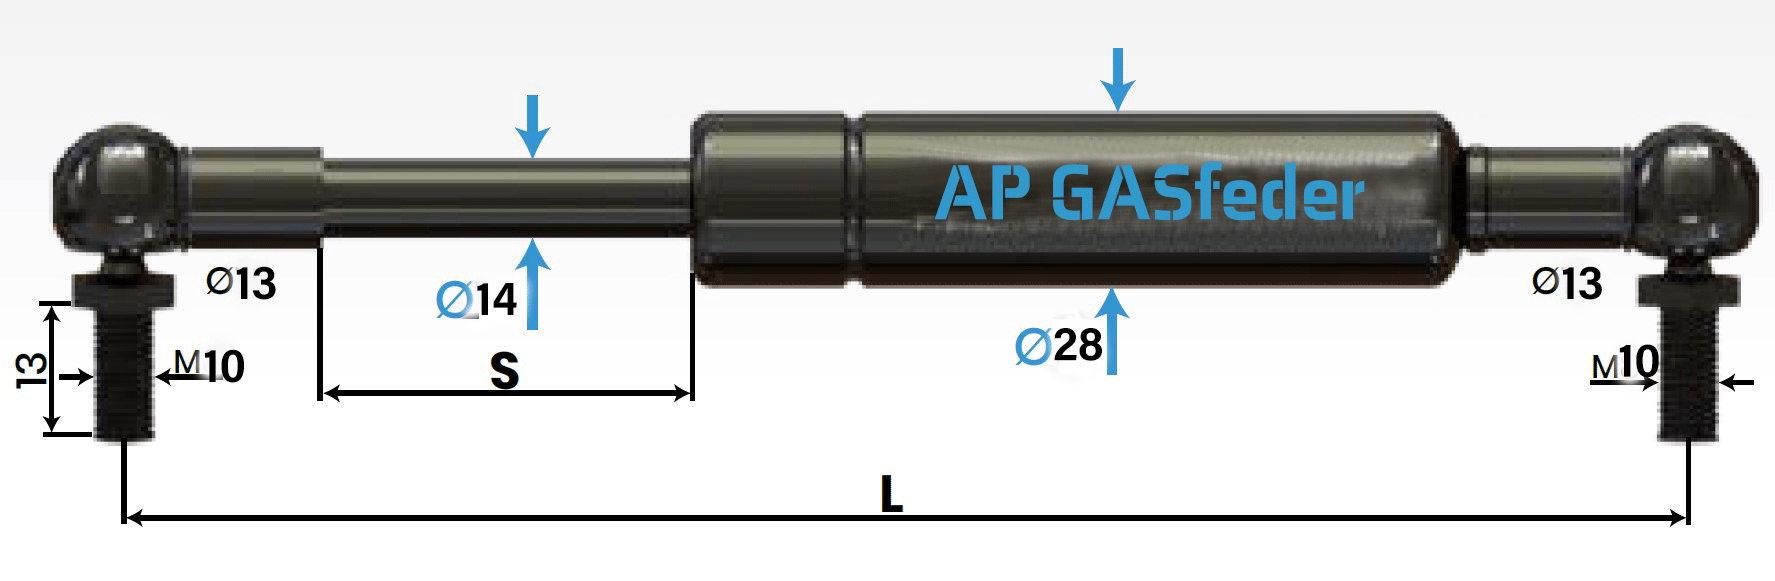 Image de AP GASfeder 1700N, 14/28, Hub(S): 500 mm, Länge (L): 1135 mm,  Alternatvie SRST.2398LO